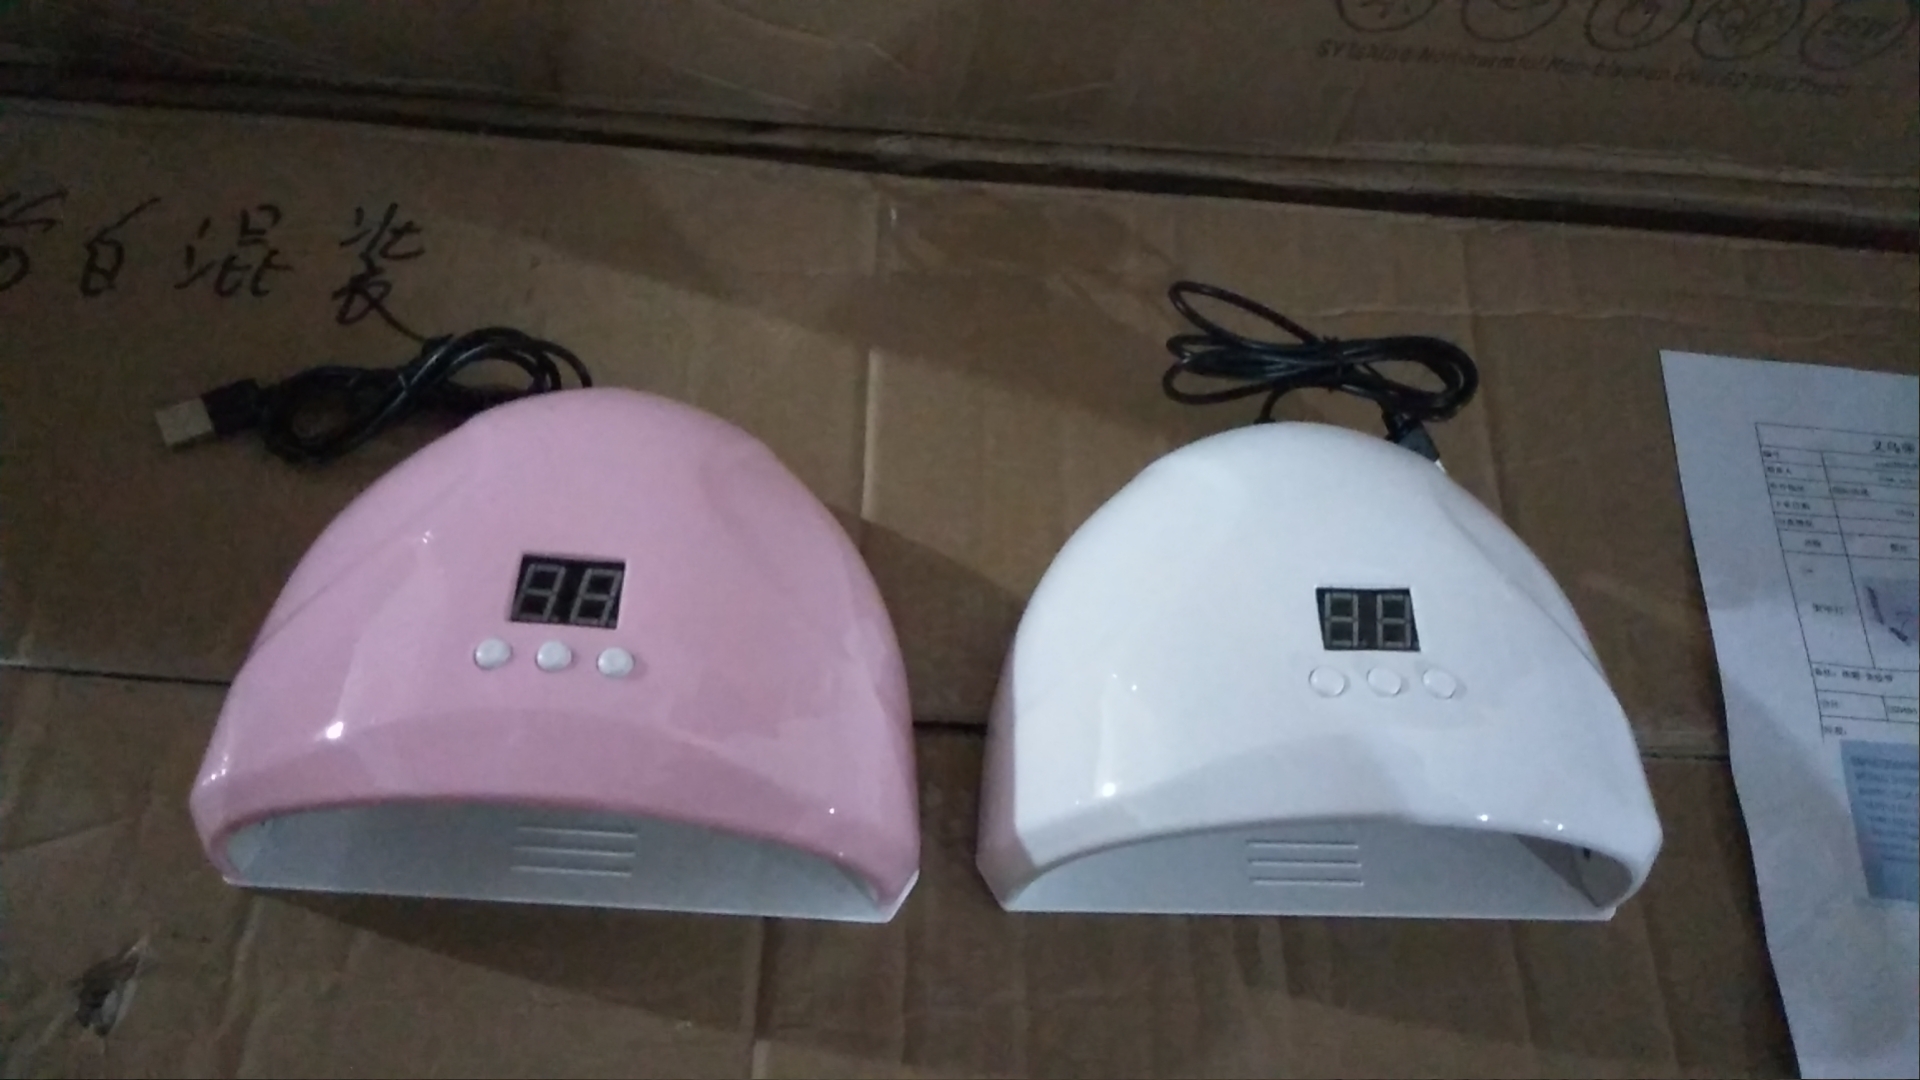 Hot selling cheap price 36W led  Portable Mini Nail Dryer 36W UV Nail dryer Lamp